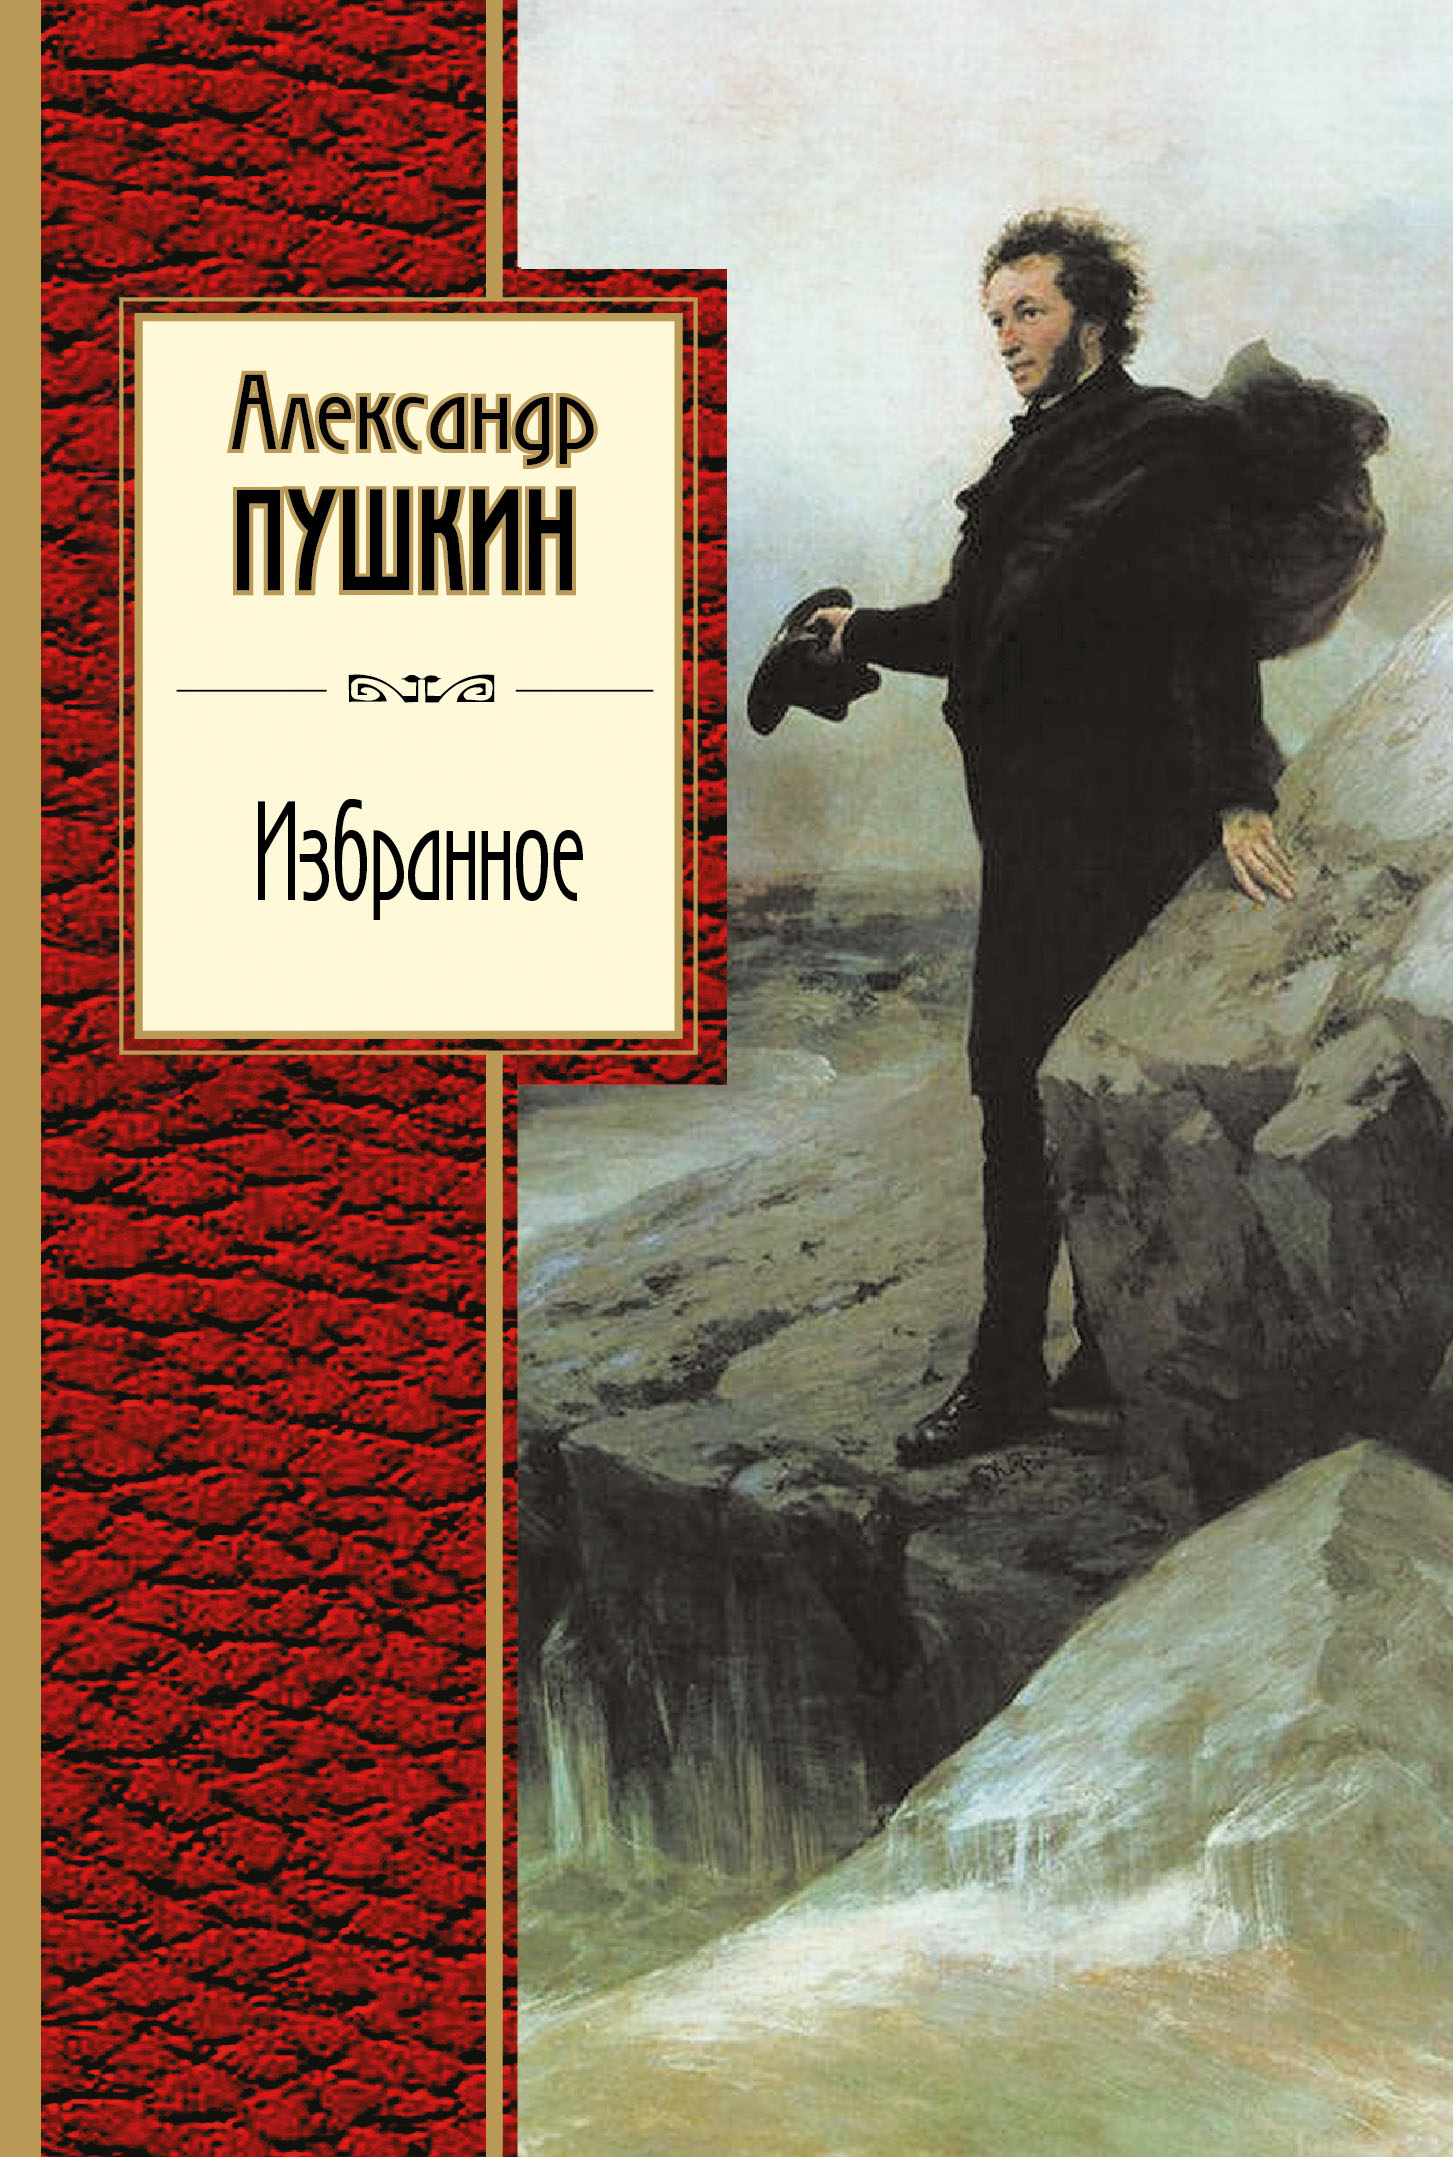 10 книг пушкина. Книги Пушкина. Обложки книг Пушкина. Пушкин обложка книги.